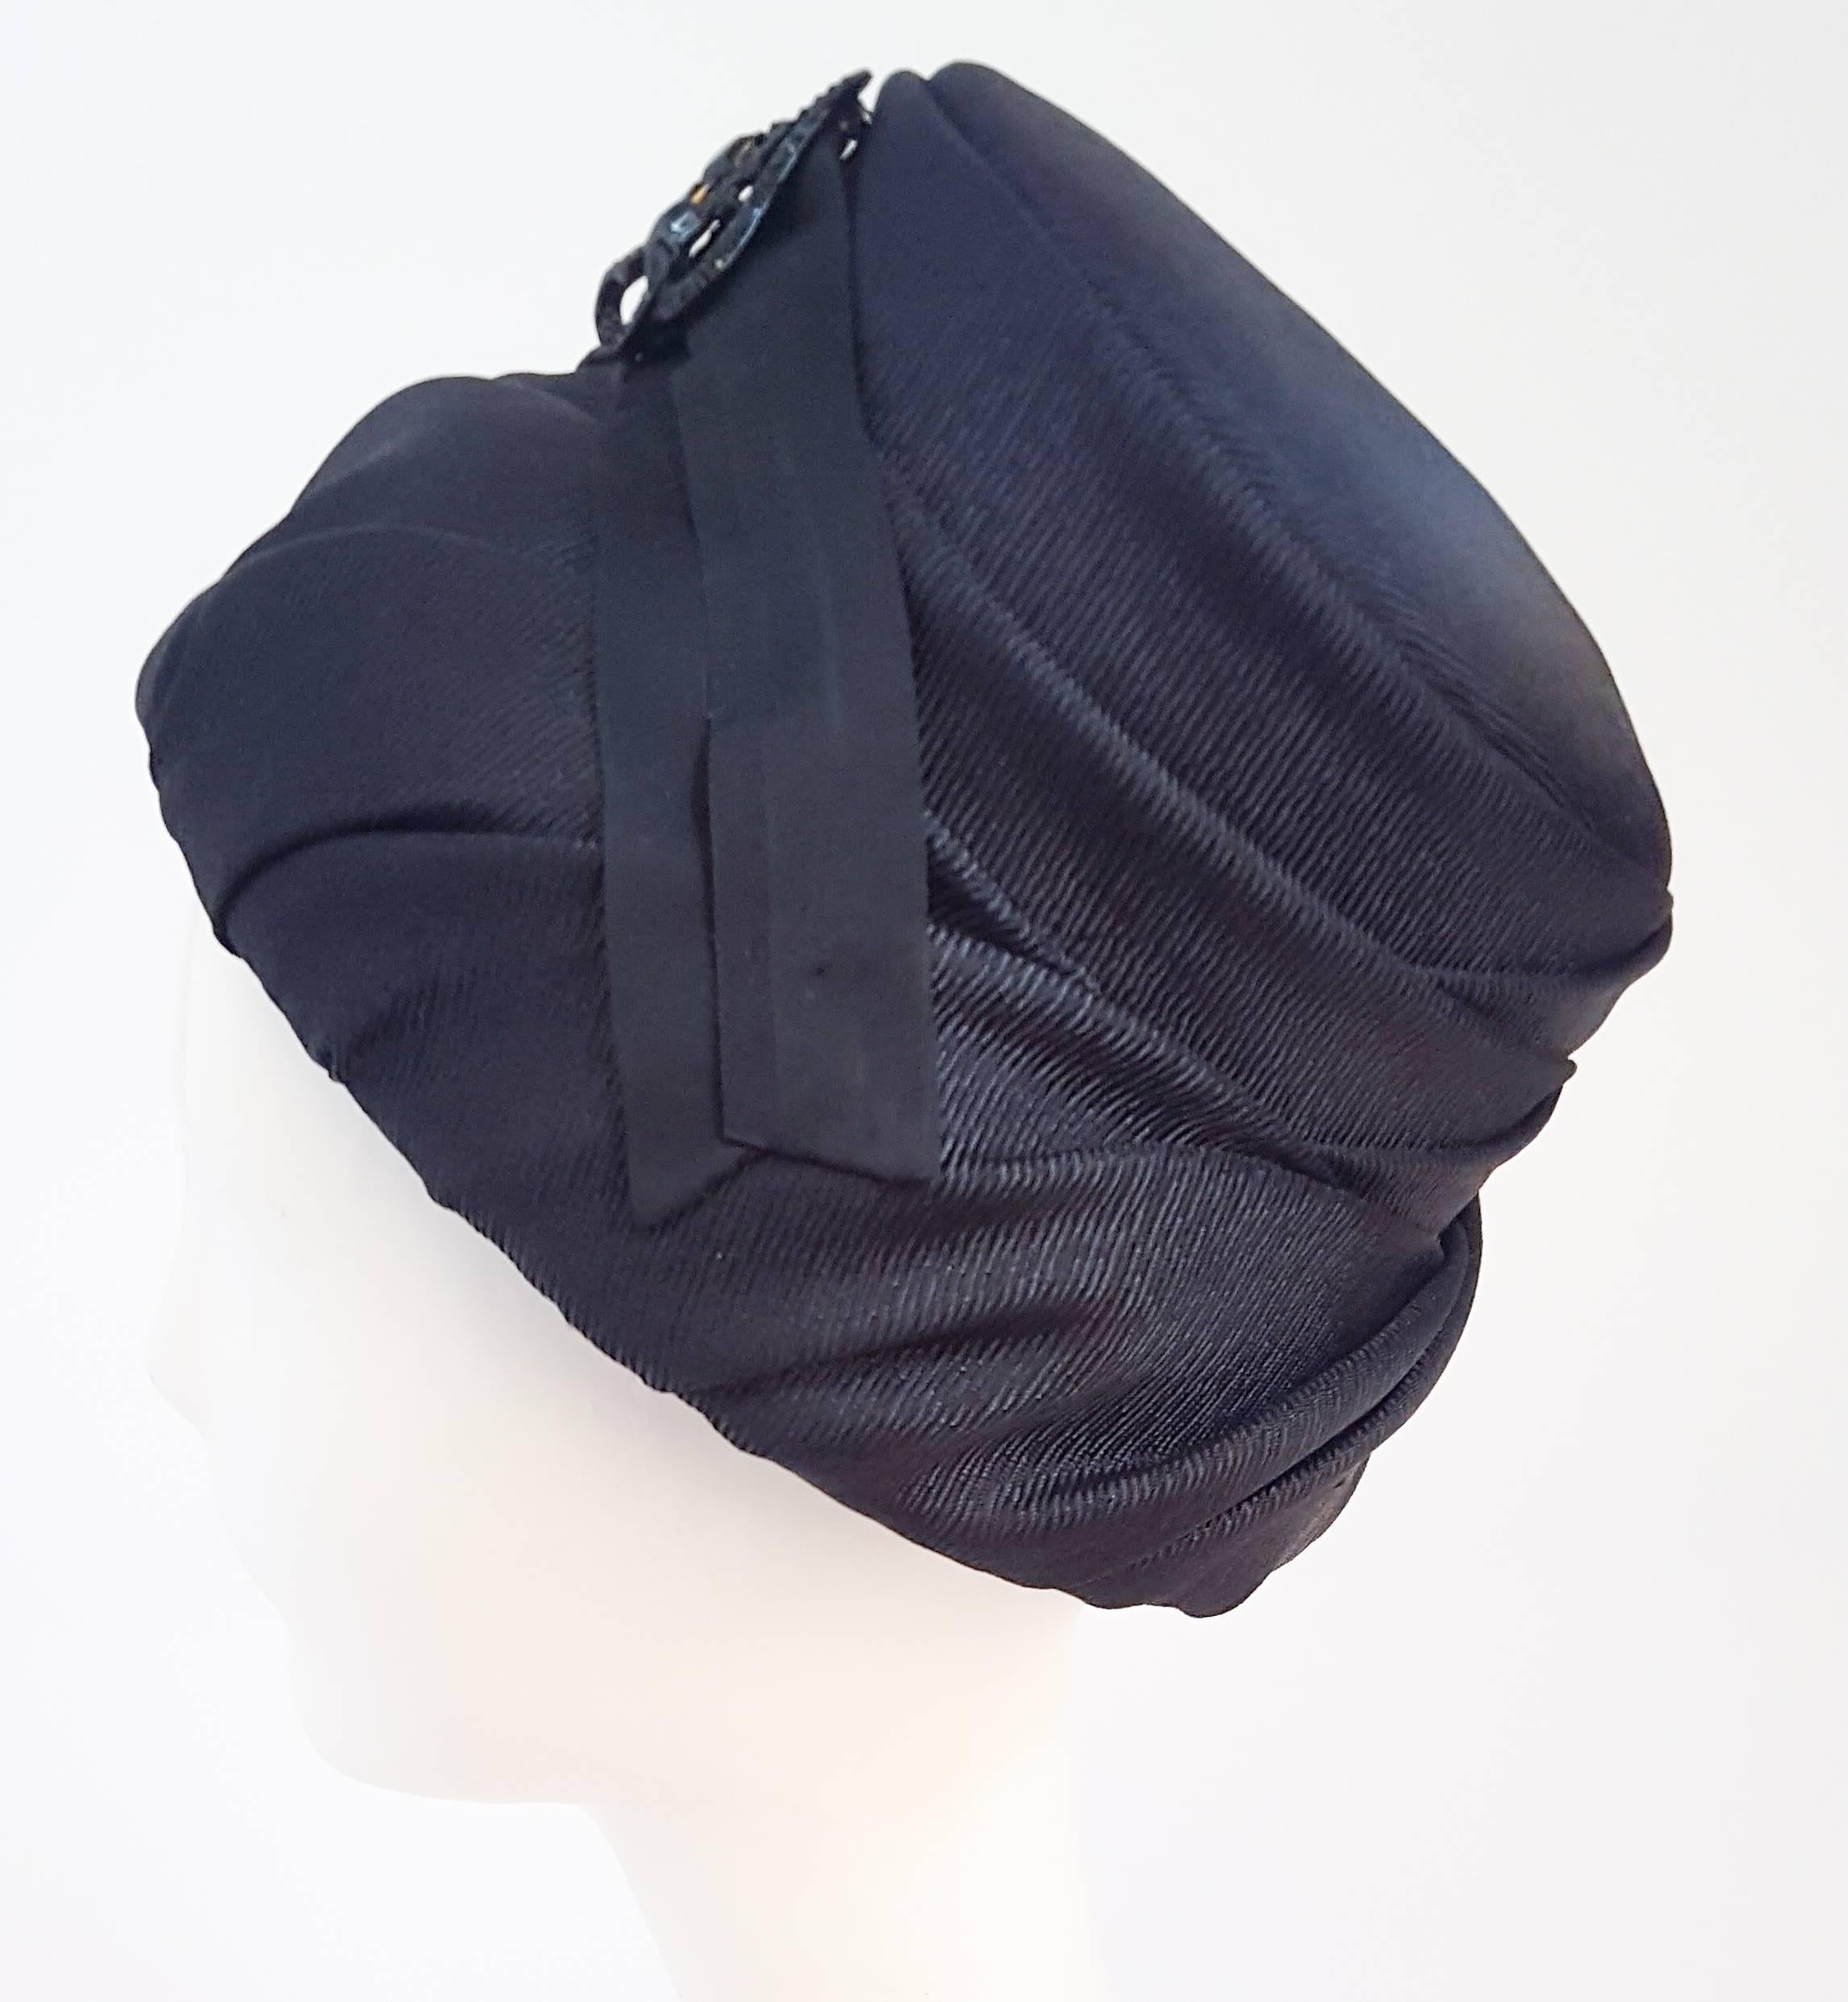 60s Mod Black Ruched Bucket Hat. Black rhinestone pin front detail. 